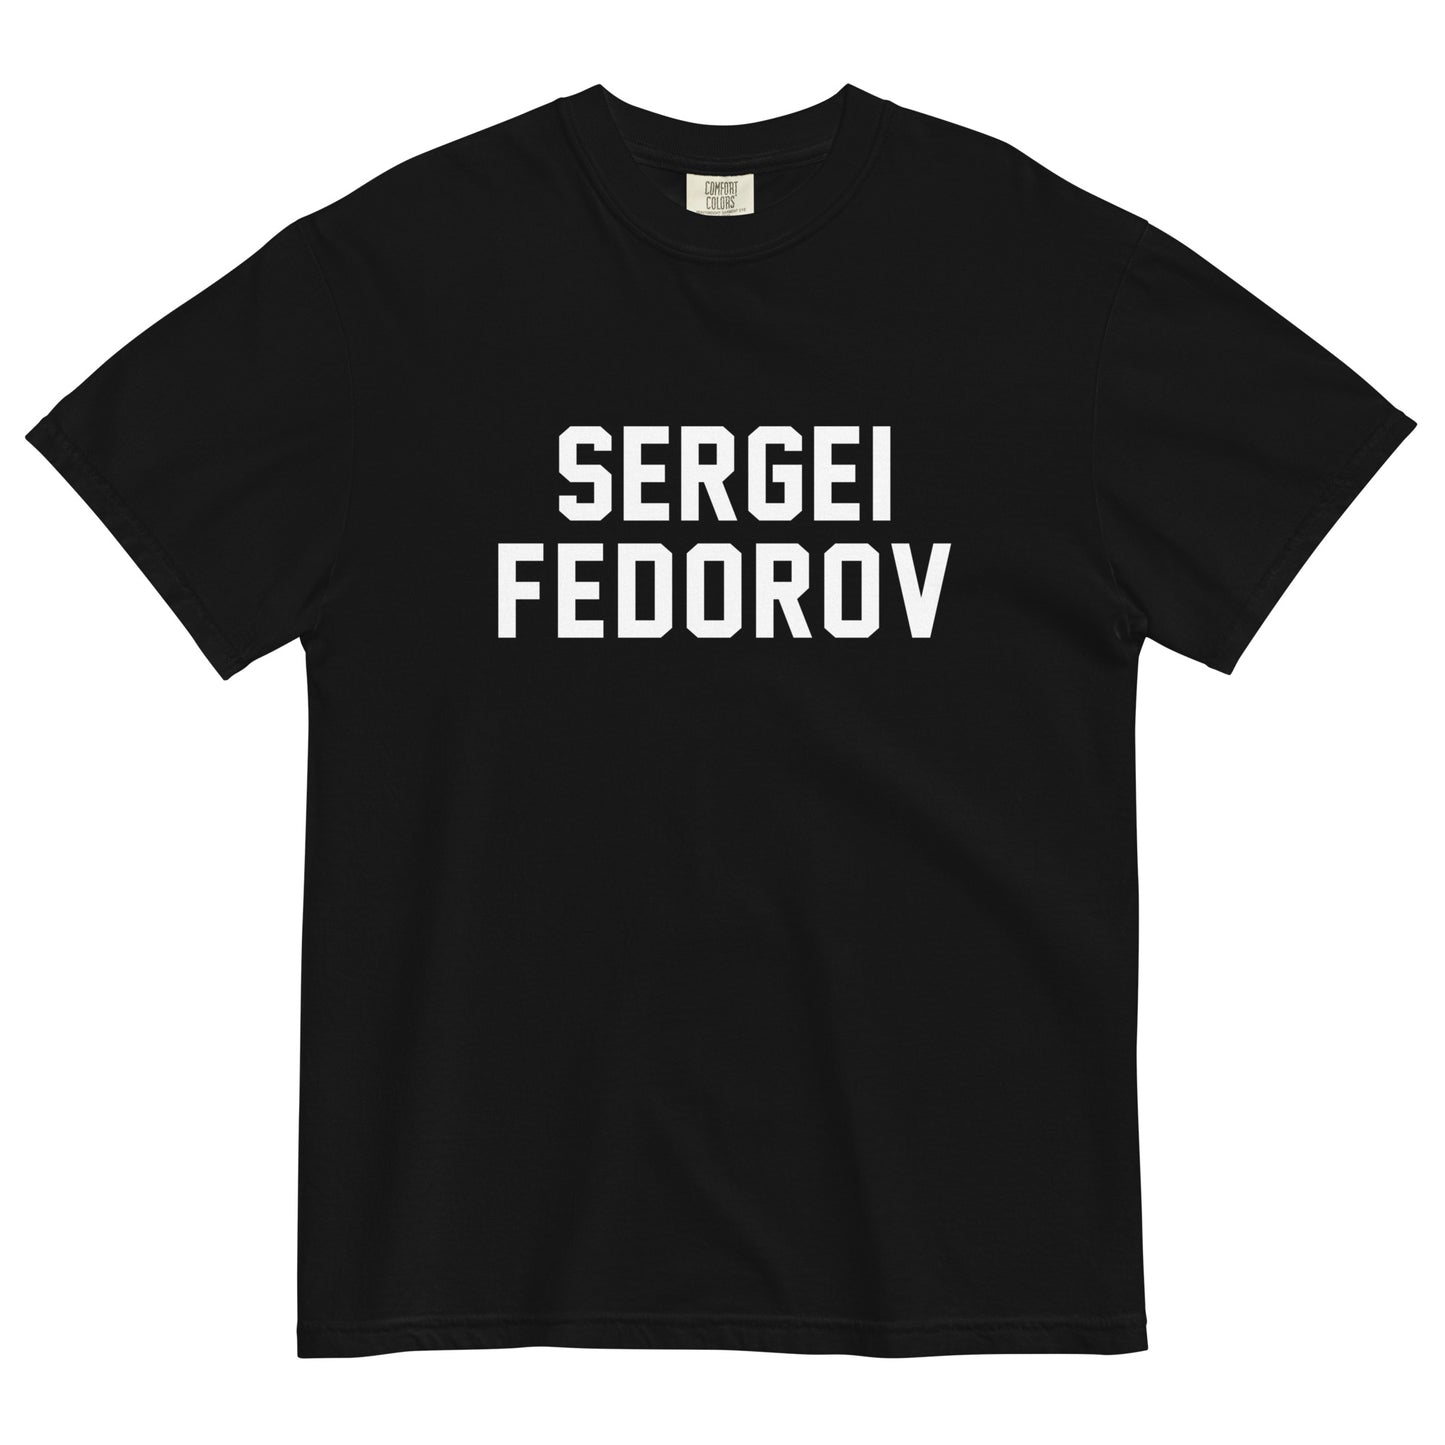 SERGEI FEDOROV